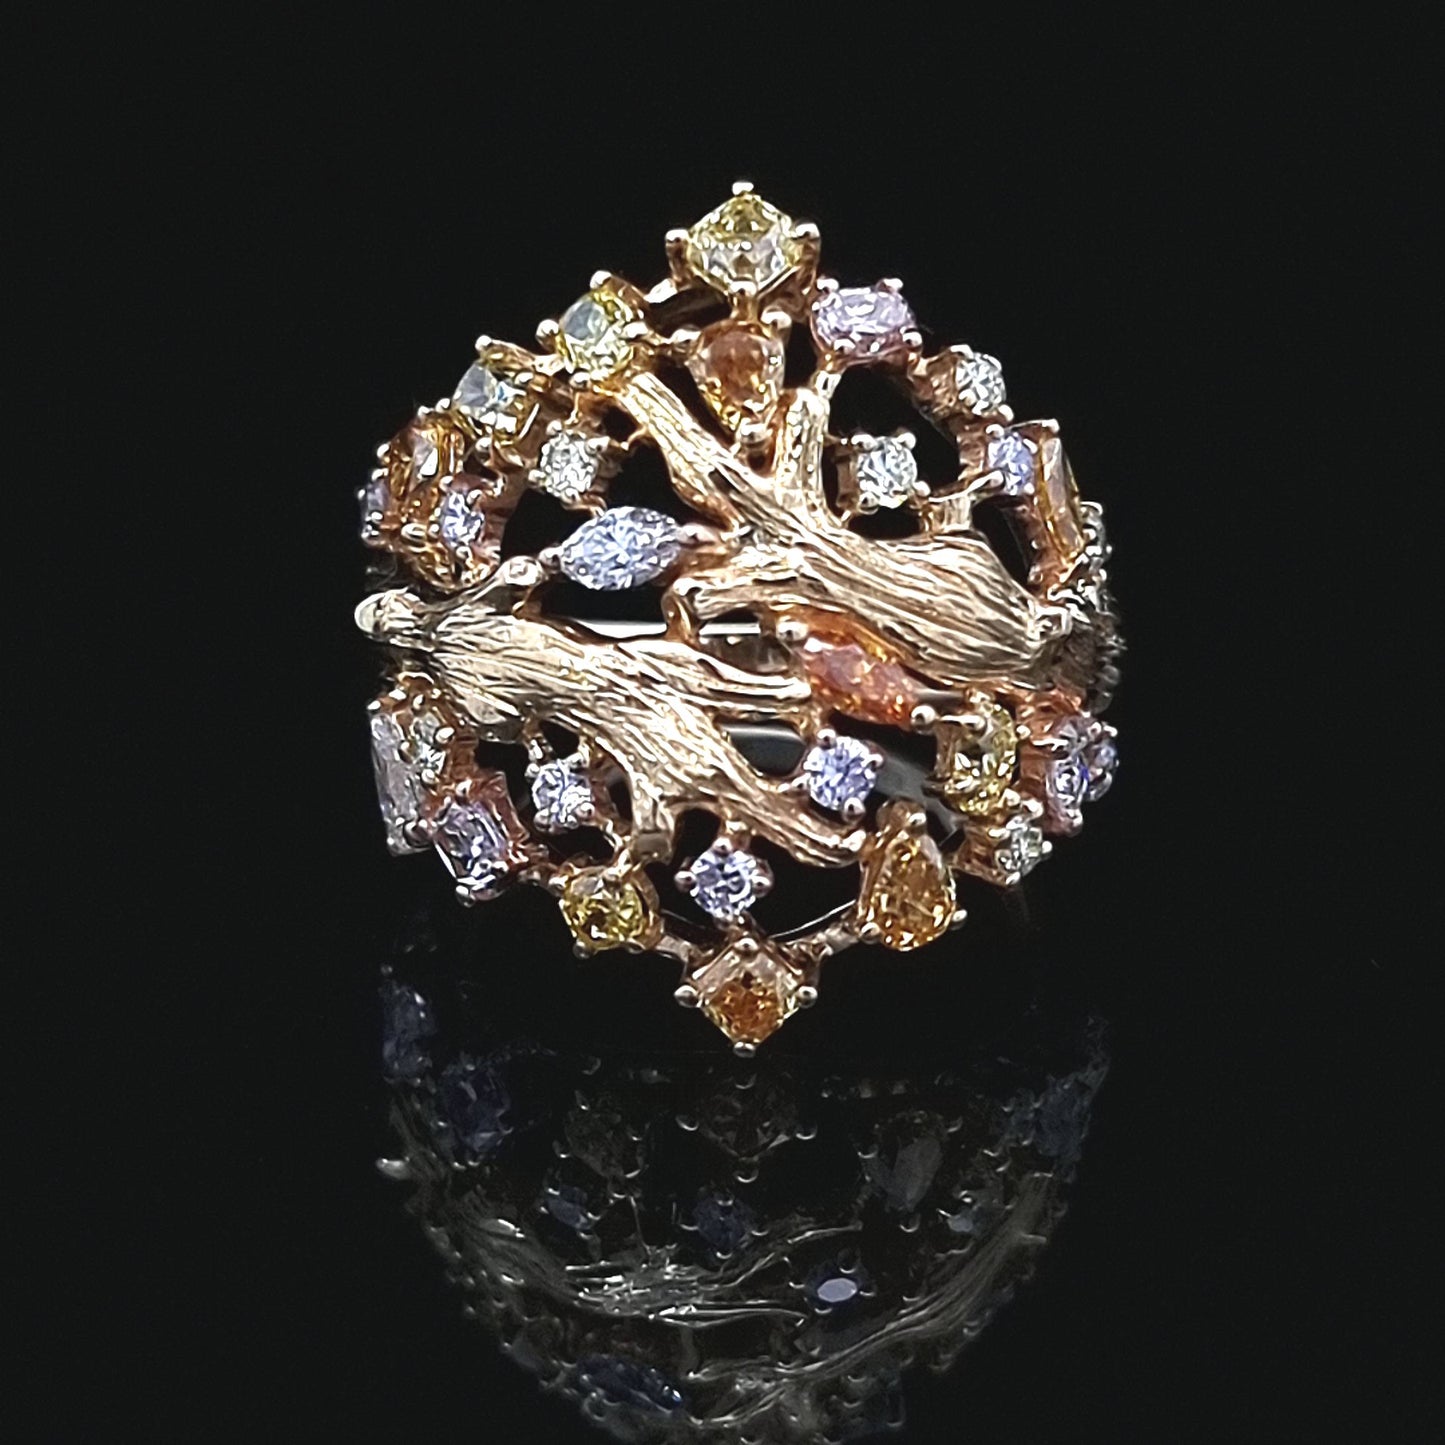 Unique Gold Ring With Fancy Shape and Fancy Colour Diamonds